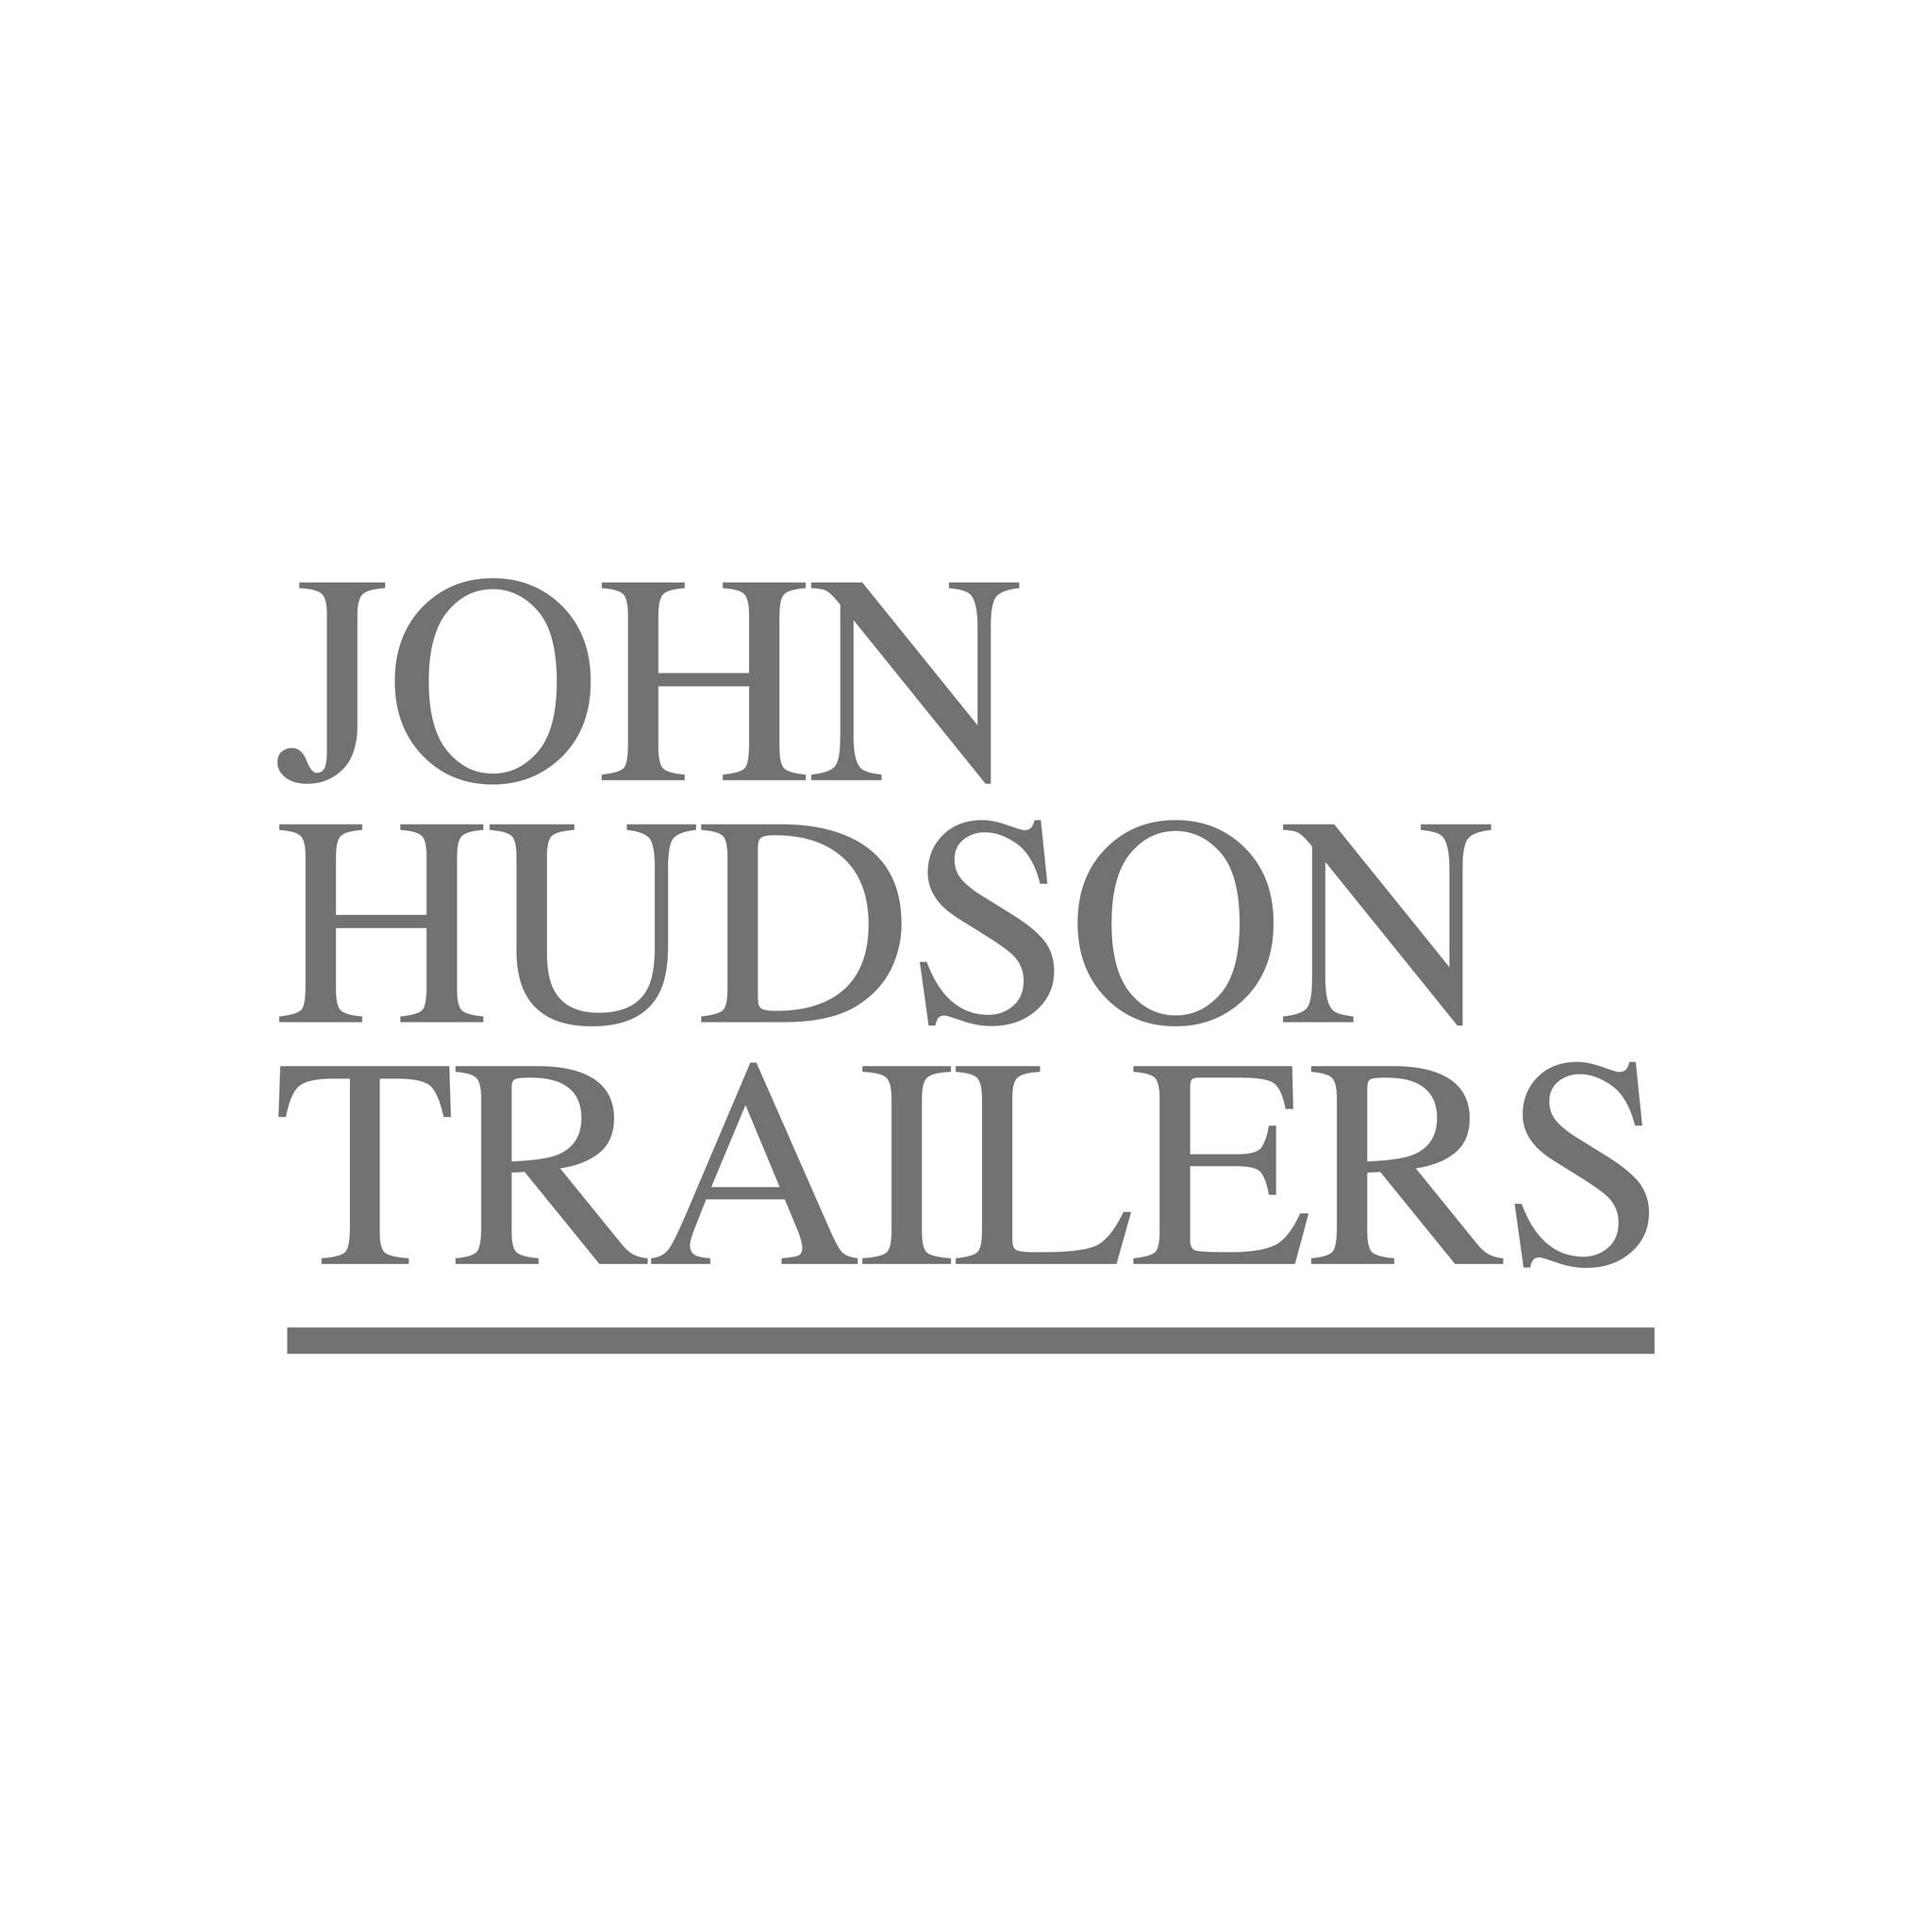 John Hudson Trailers